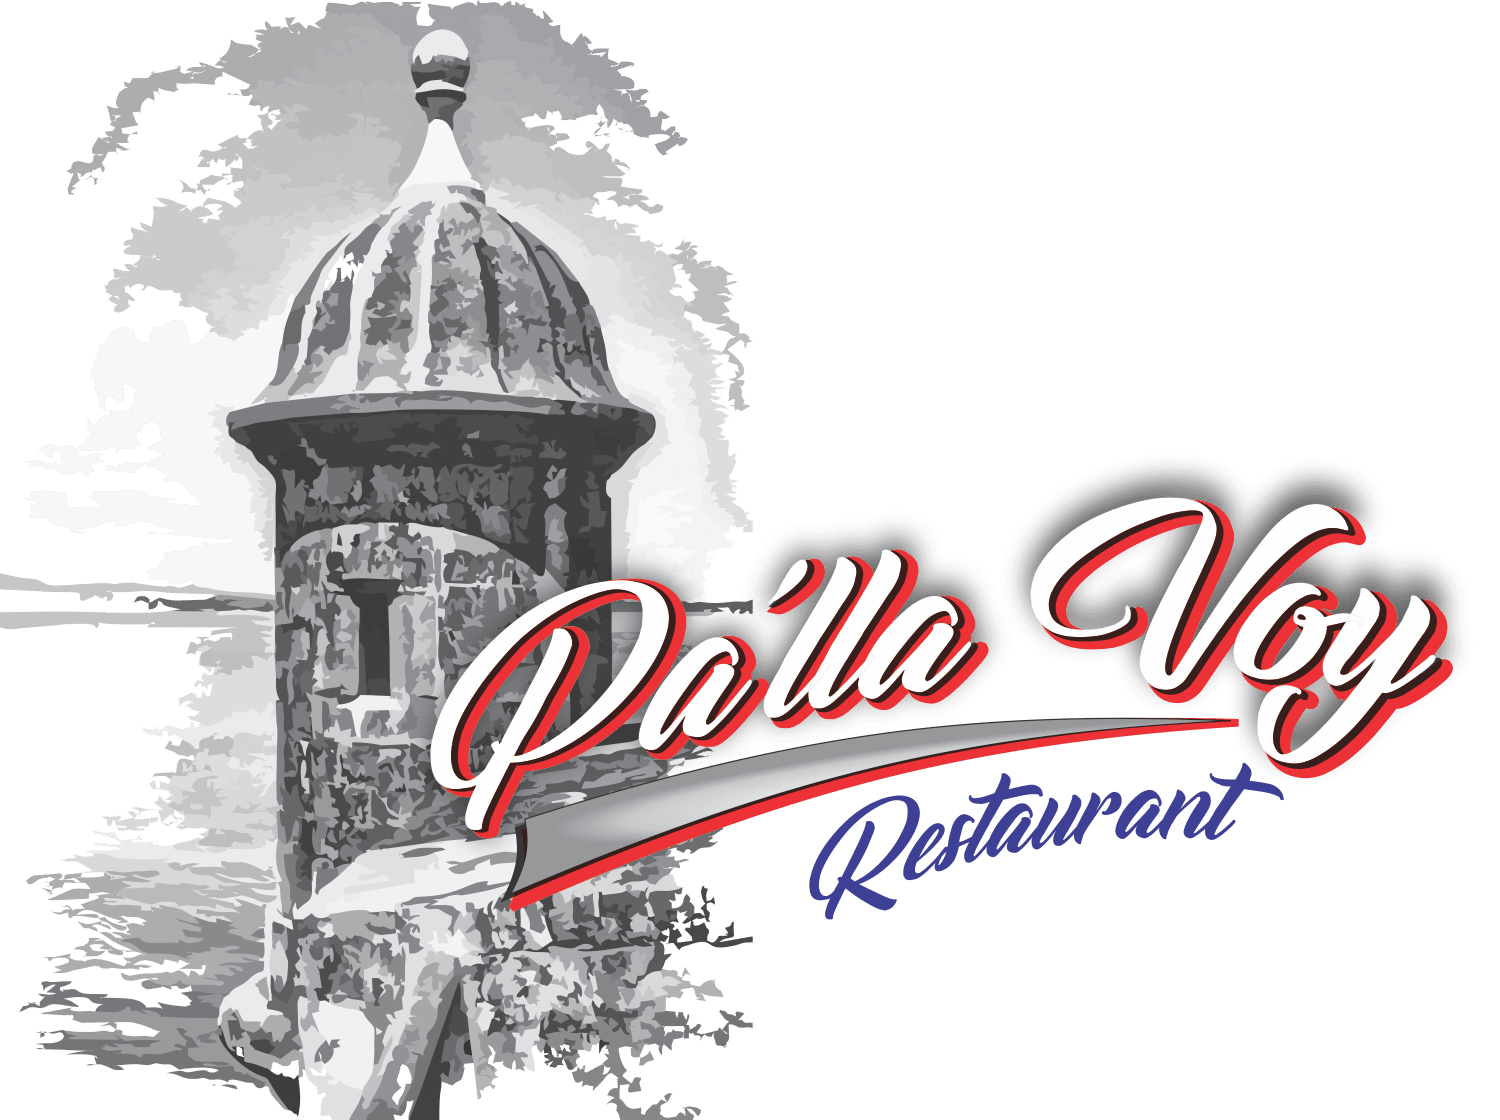 Pa'lla Voy Restaurant, LLC